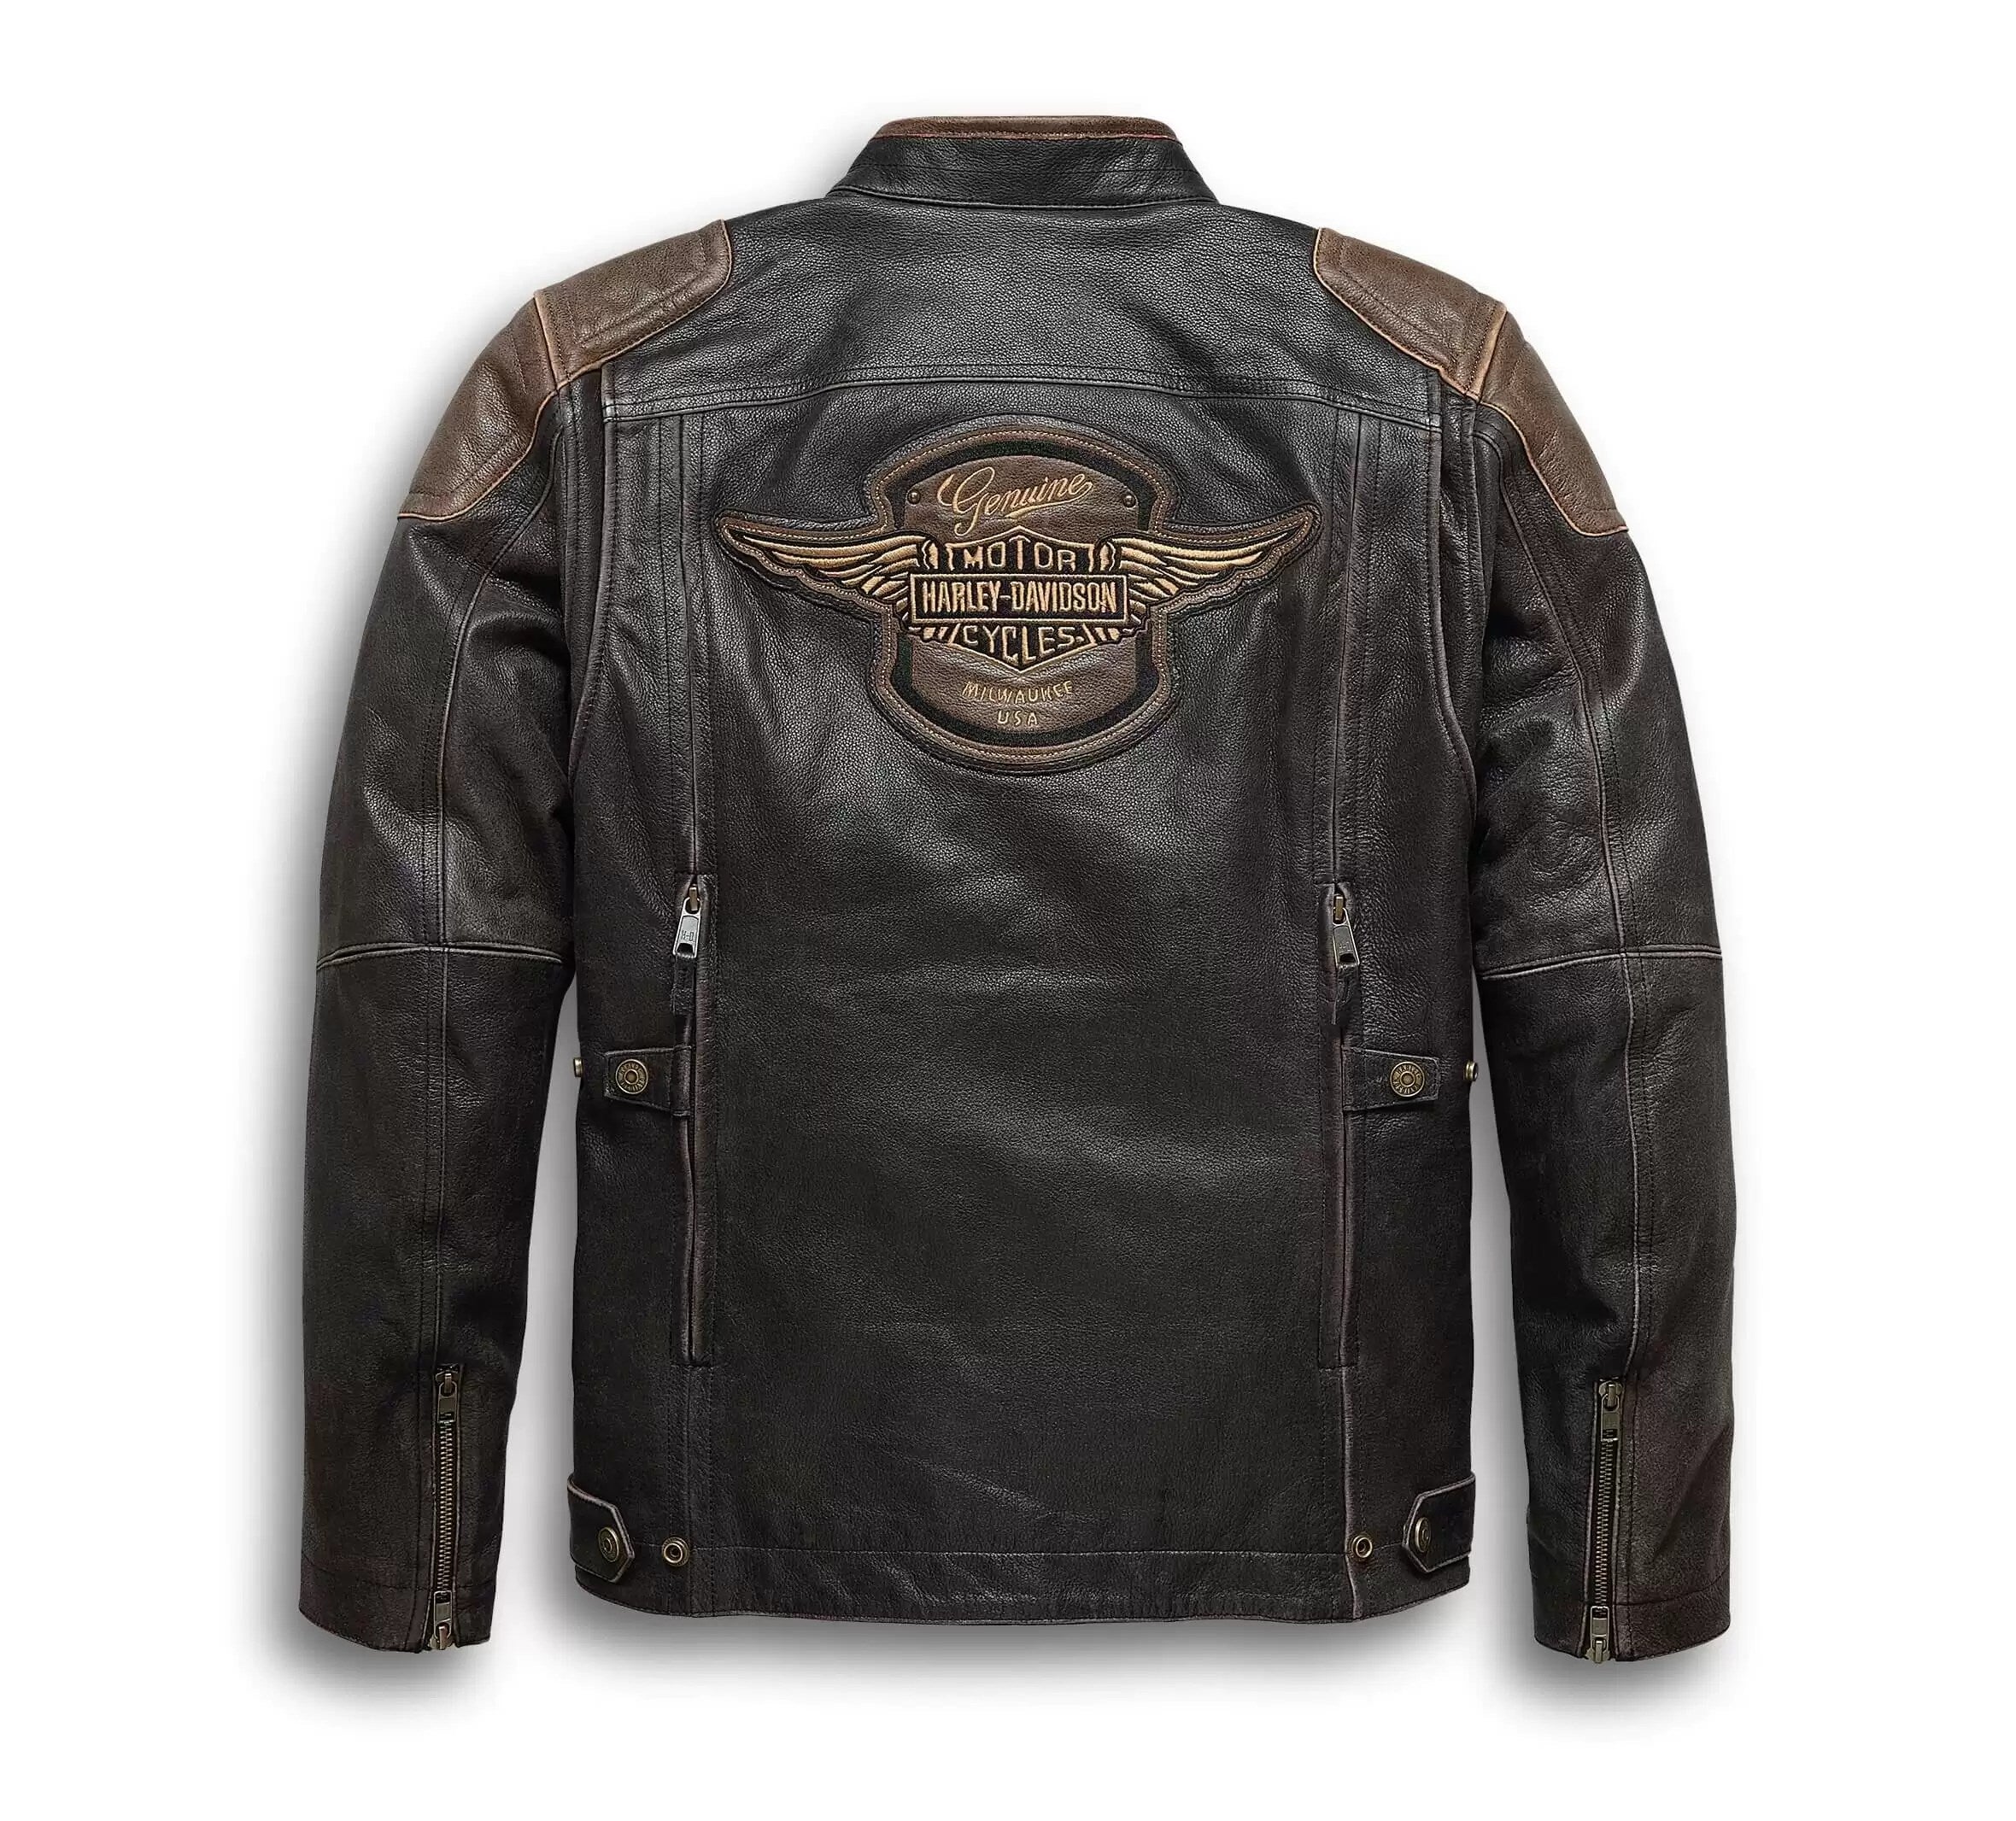 Brown and Black Harley Davidson Motorcycle Jacket